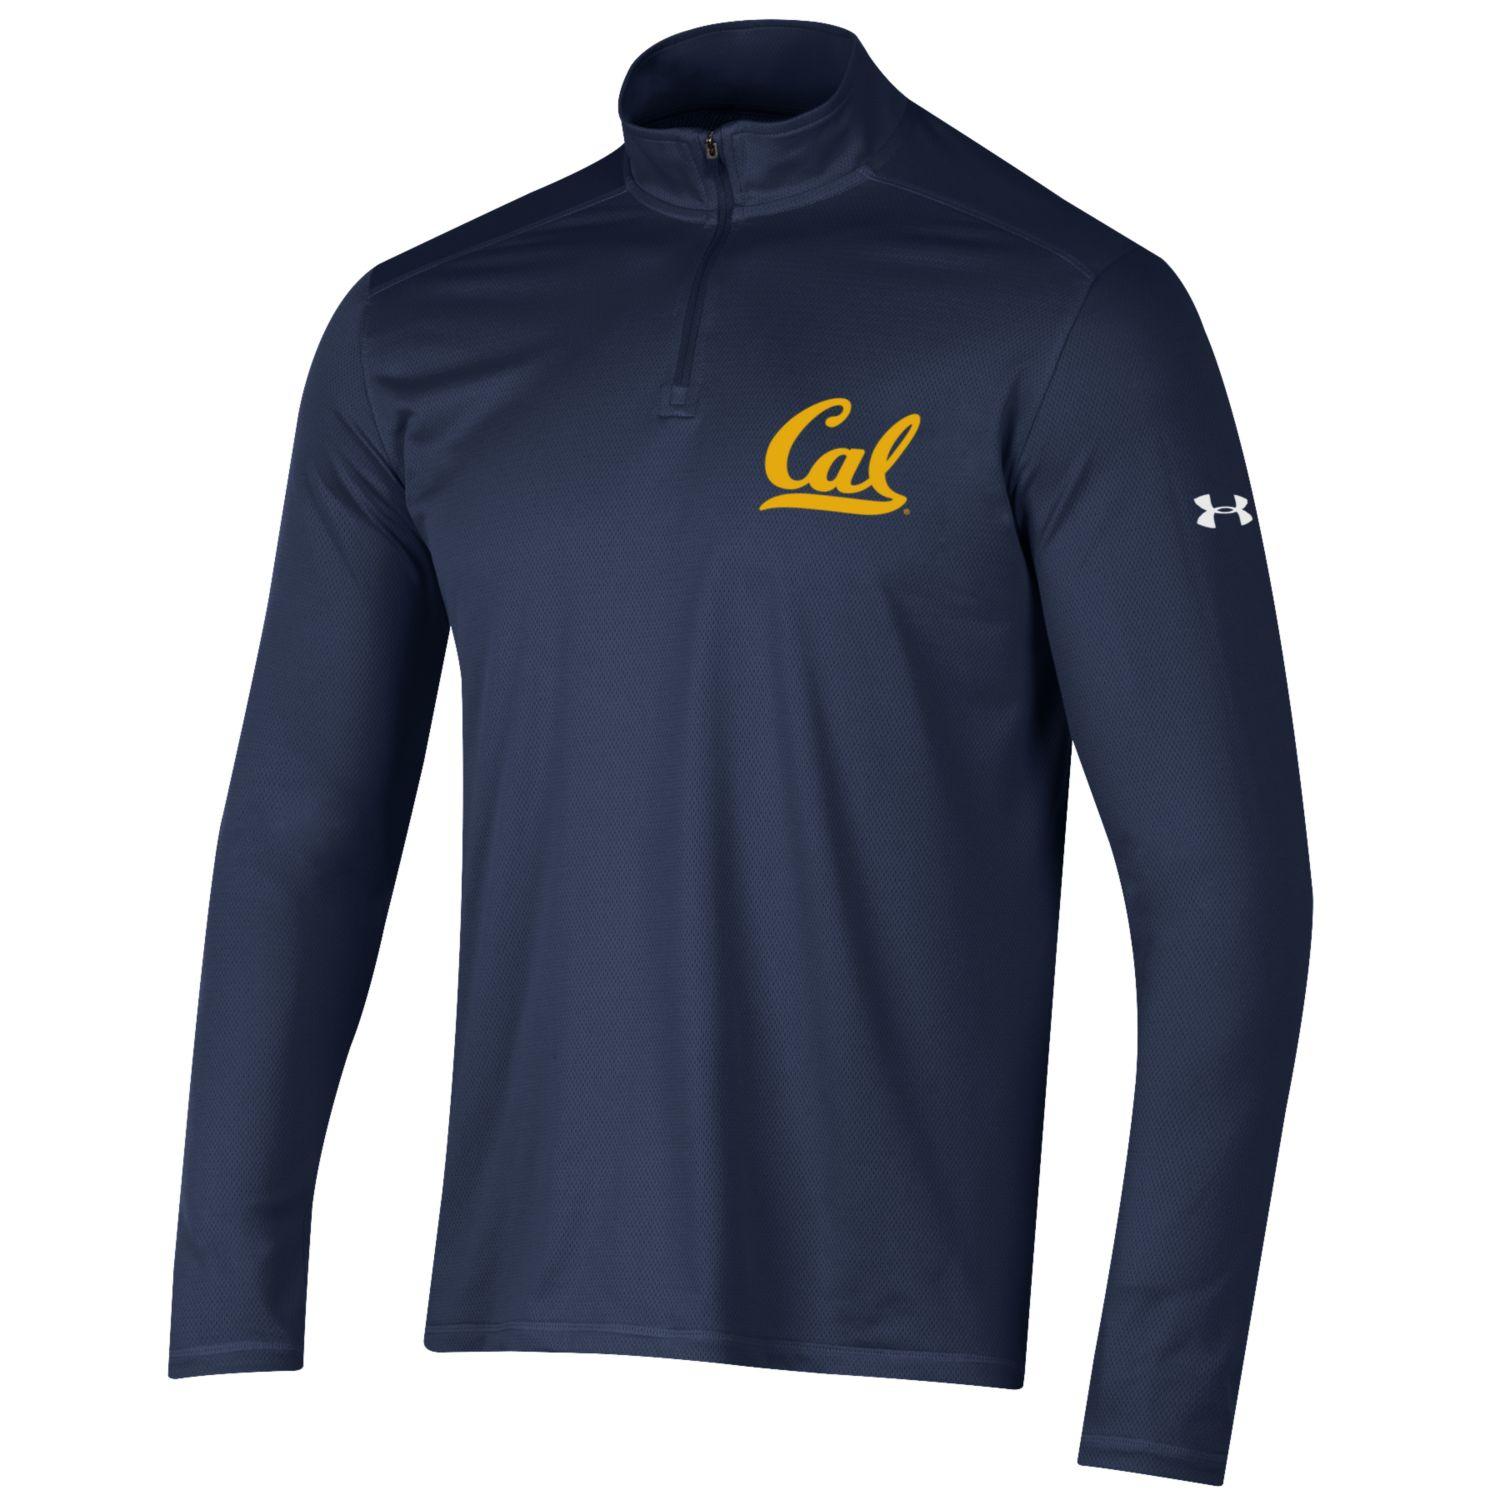 U.C. Berkeley Cal embroidered men's Under Armour tech 1/4 Zip shirt-Navy-Shop College Wear